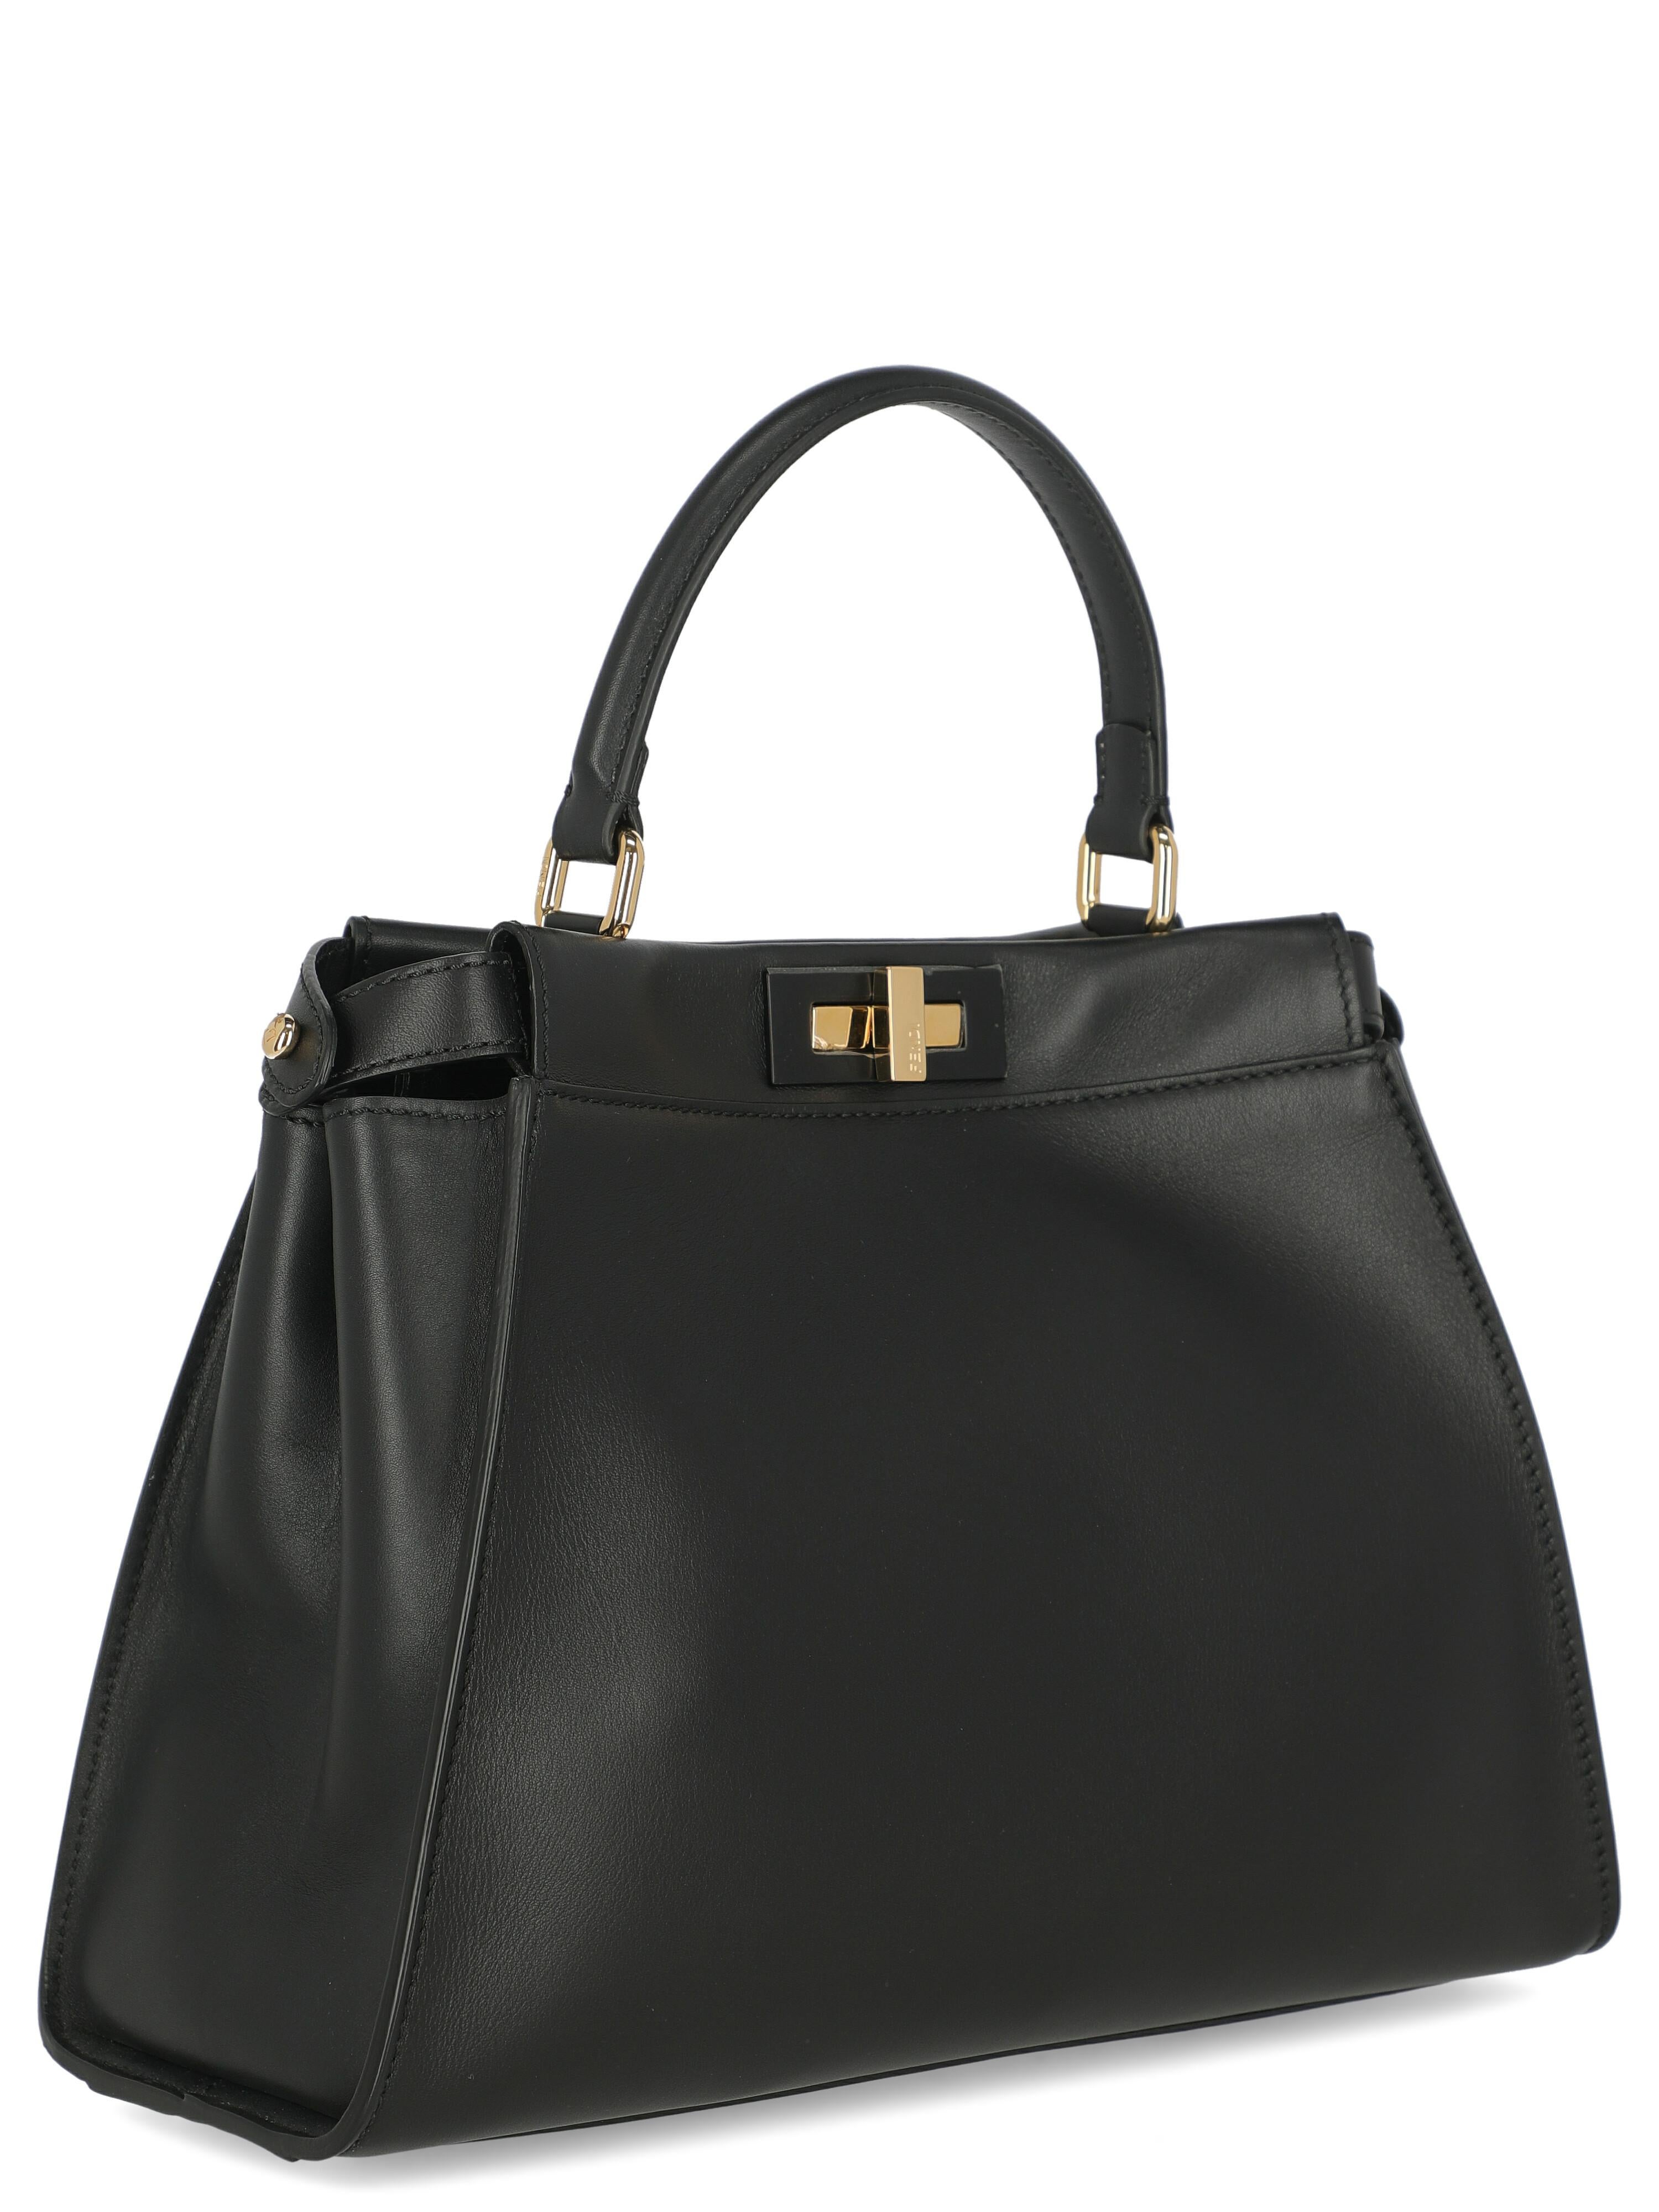 Fendi Women  Handbags  Peekaboo Black Leather In Excellent Condition For Sale In Milan, IT